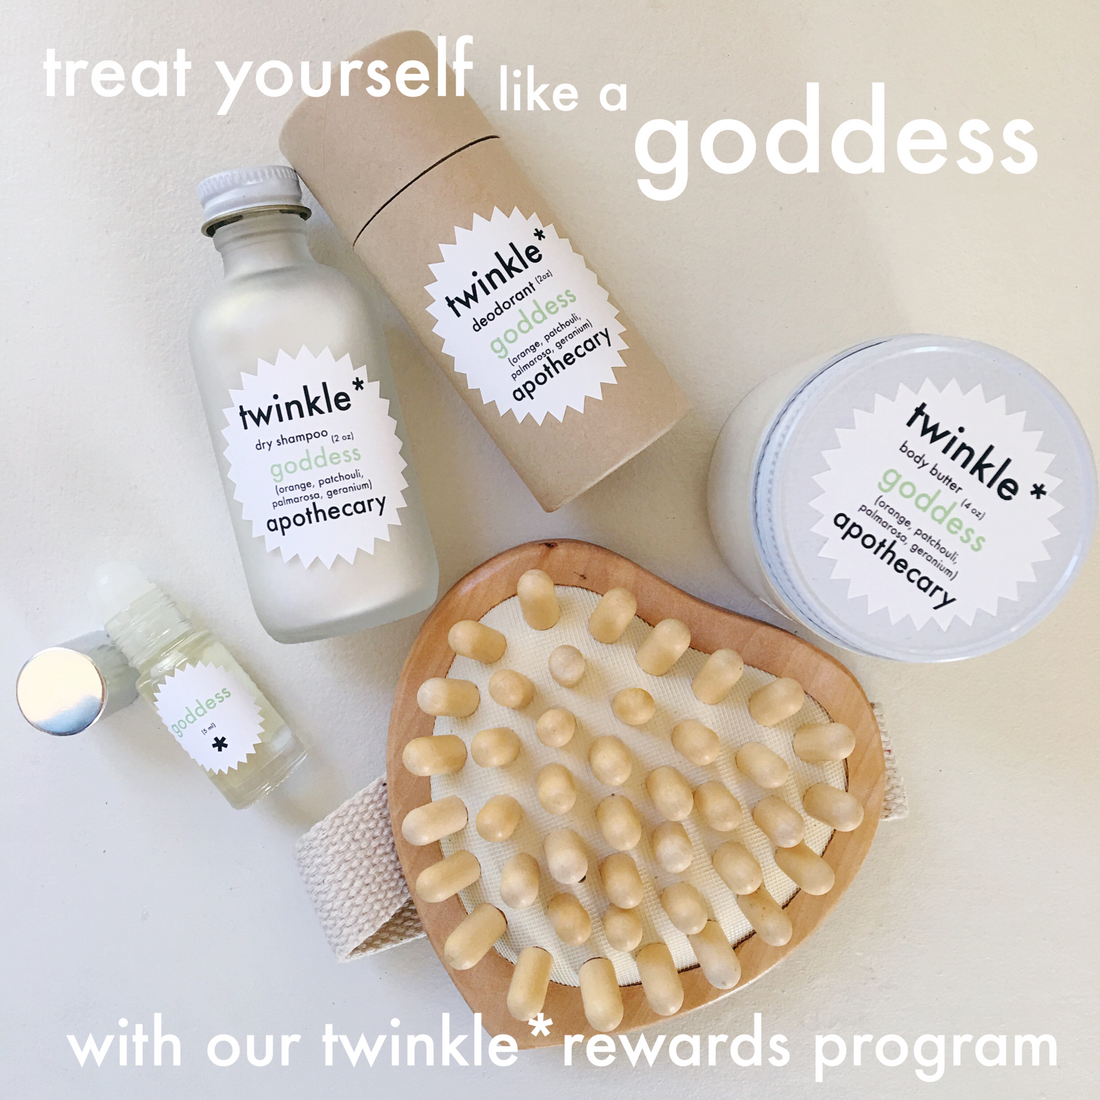 twinkle apothecary rewards program 